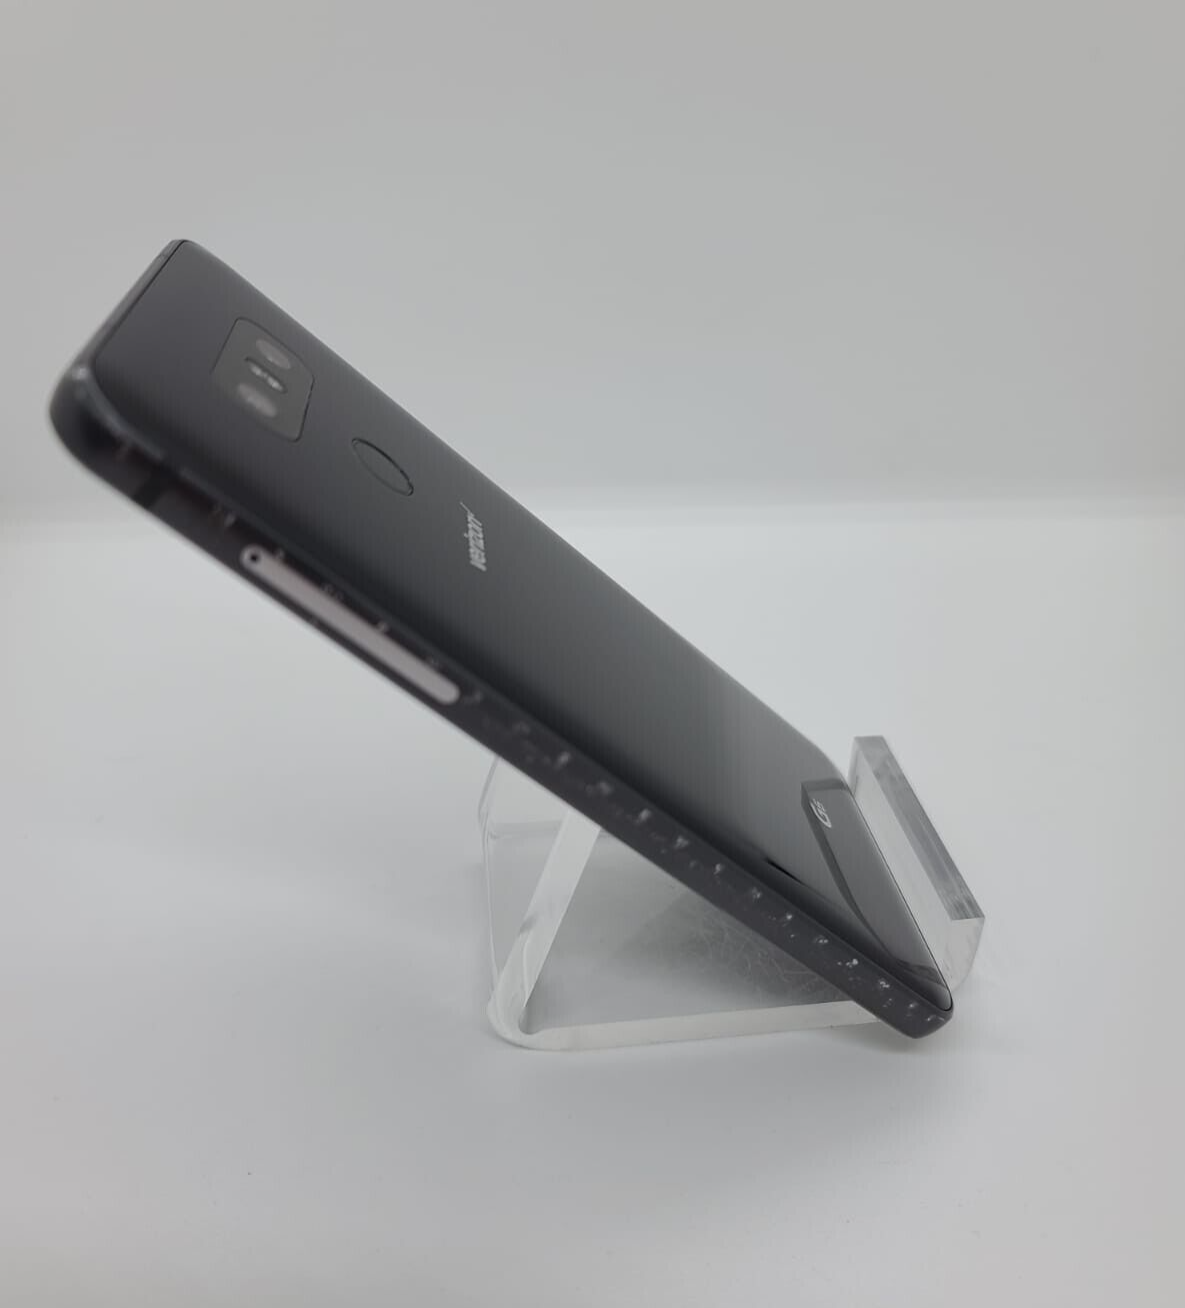 LG G6 32GB Verizon Android Black 4G LTE Smartphone VS988